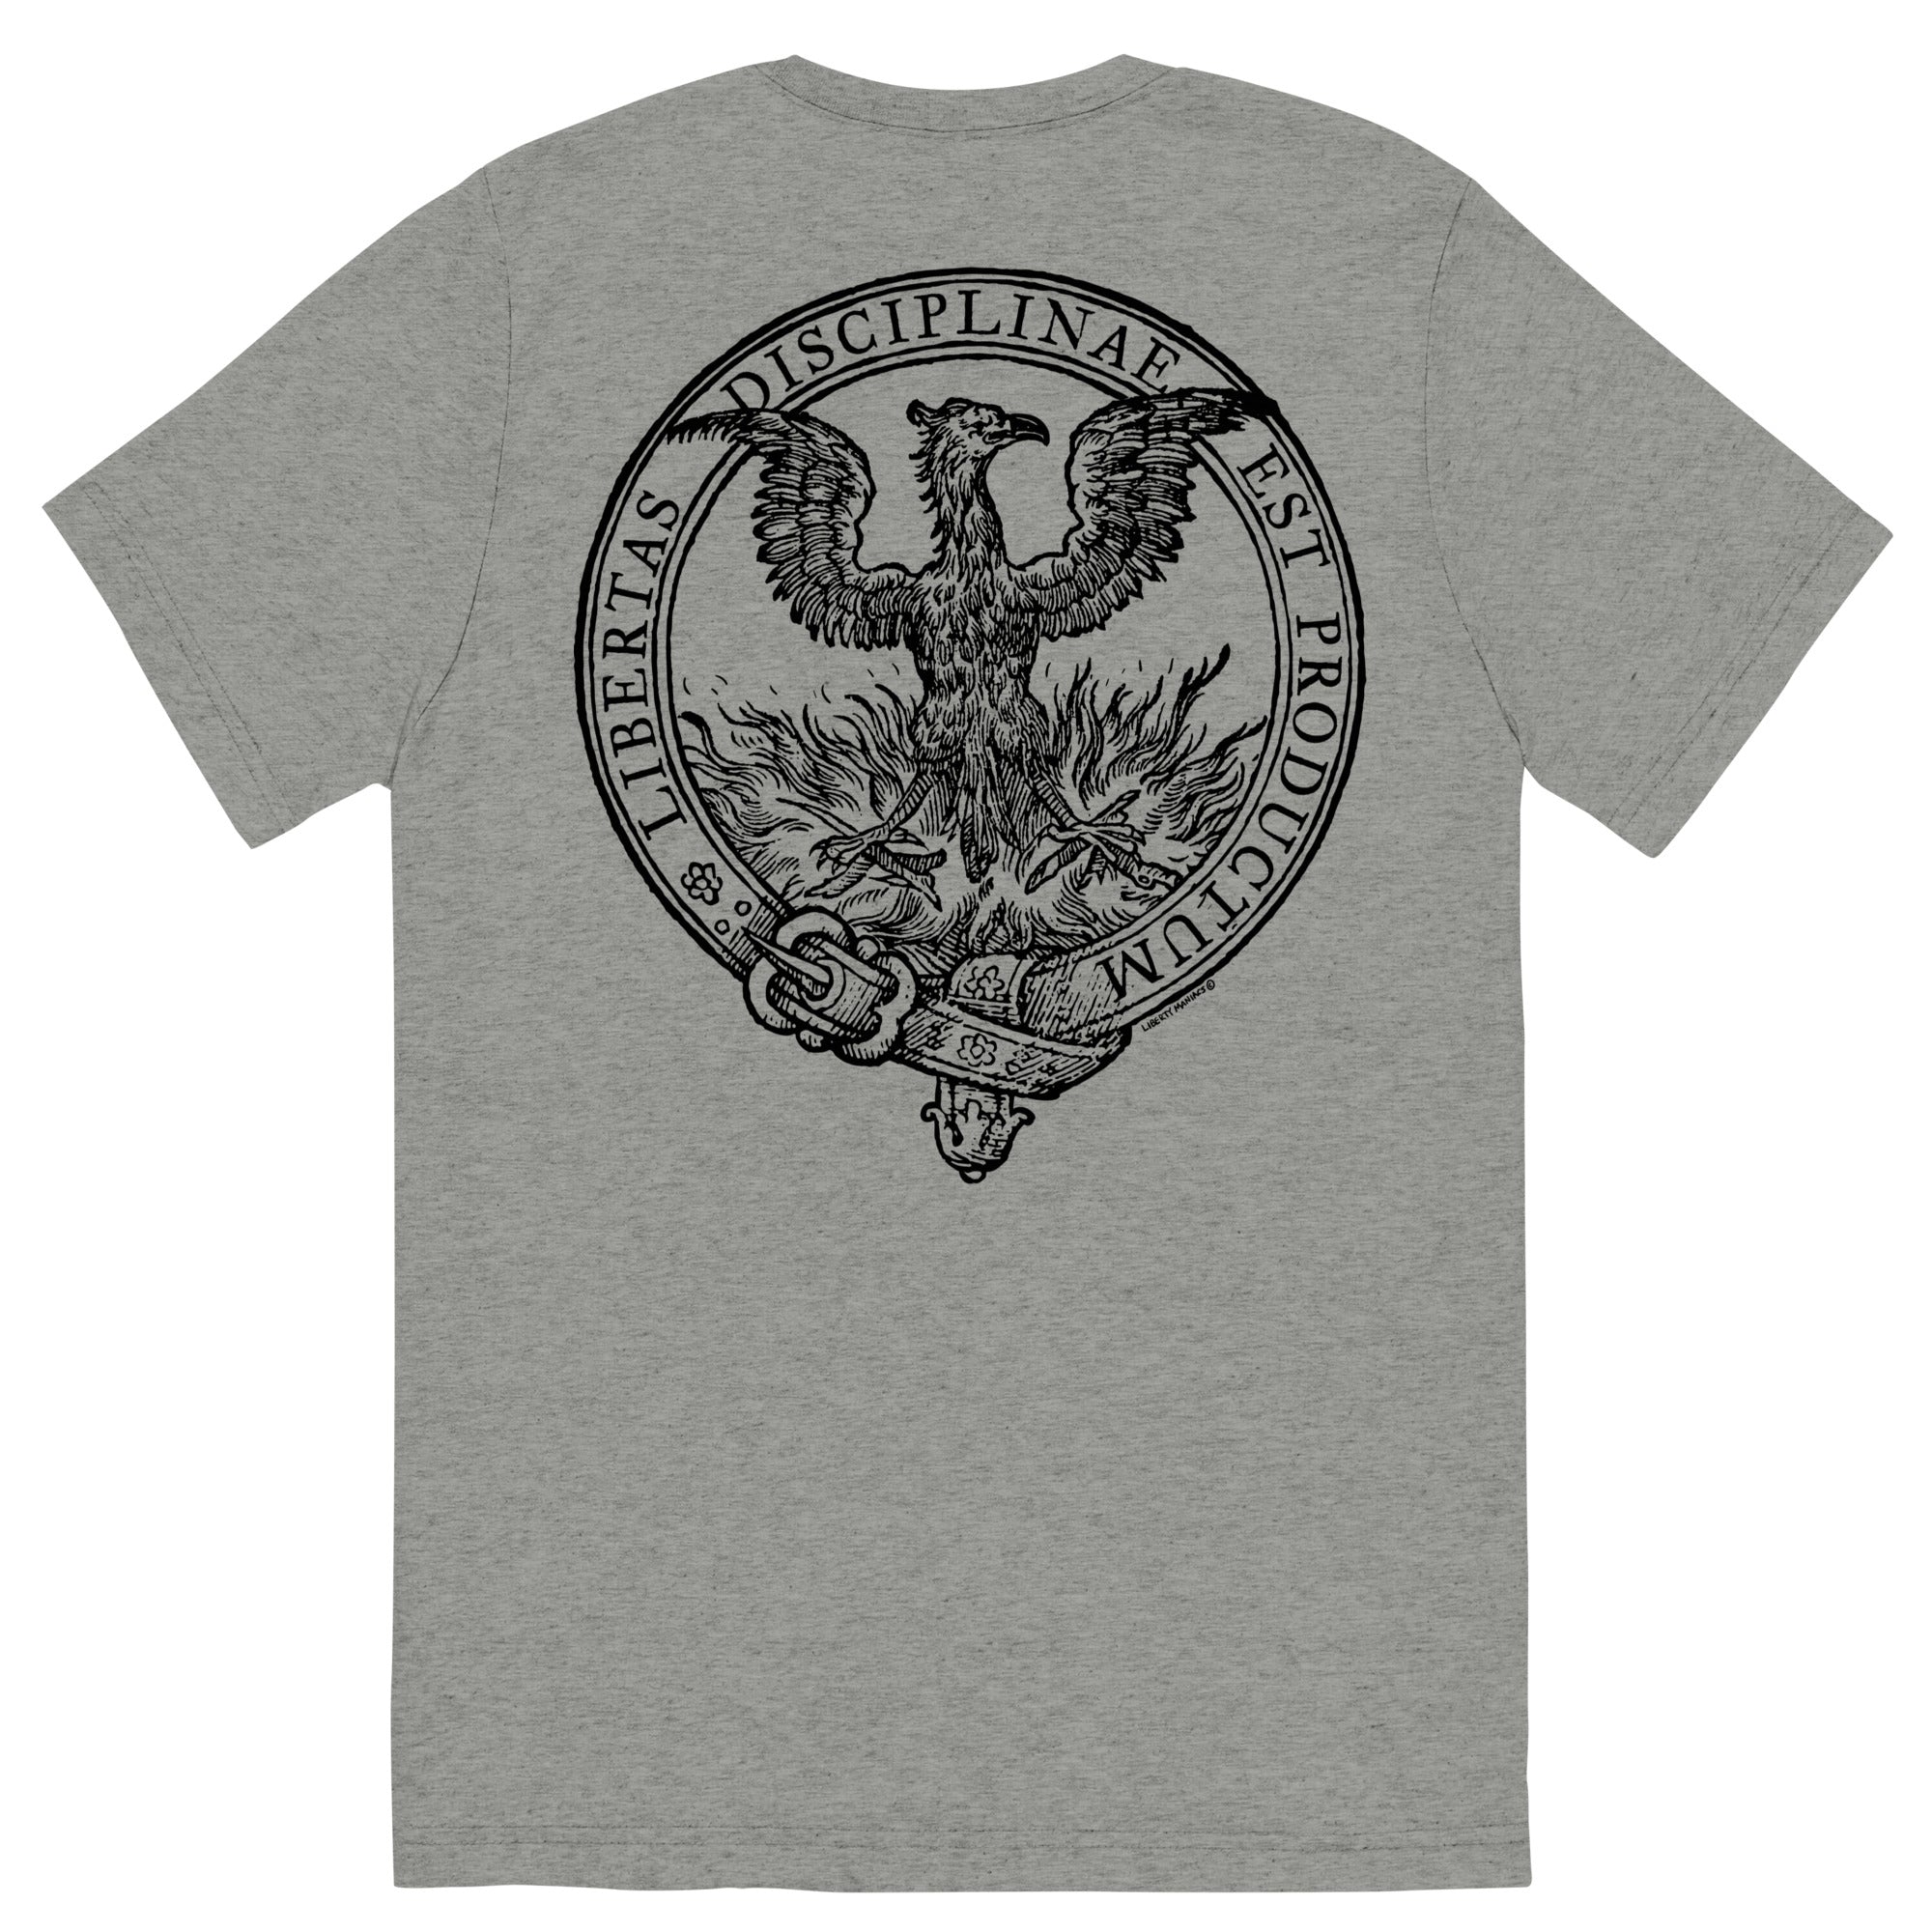 Where Discipline Reigns Liberty Flourishes Tri-Blend Graphic T-Shirt